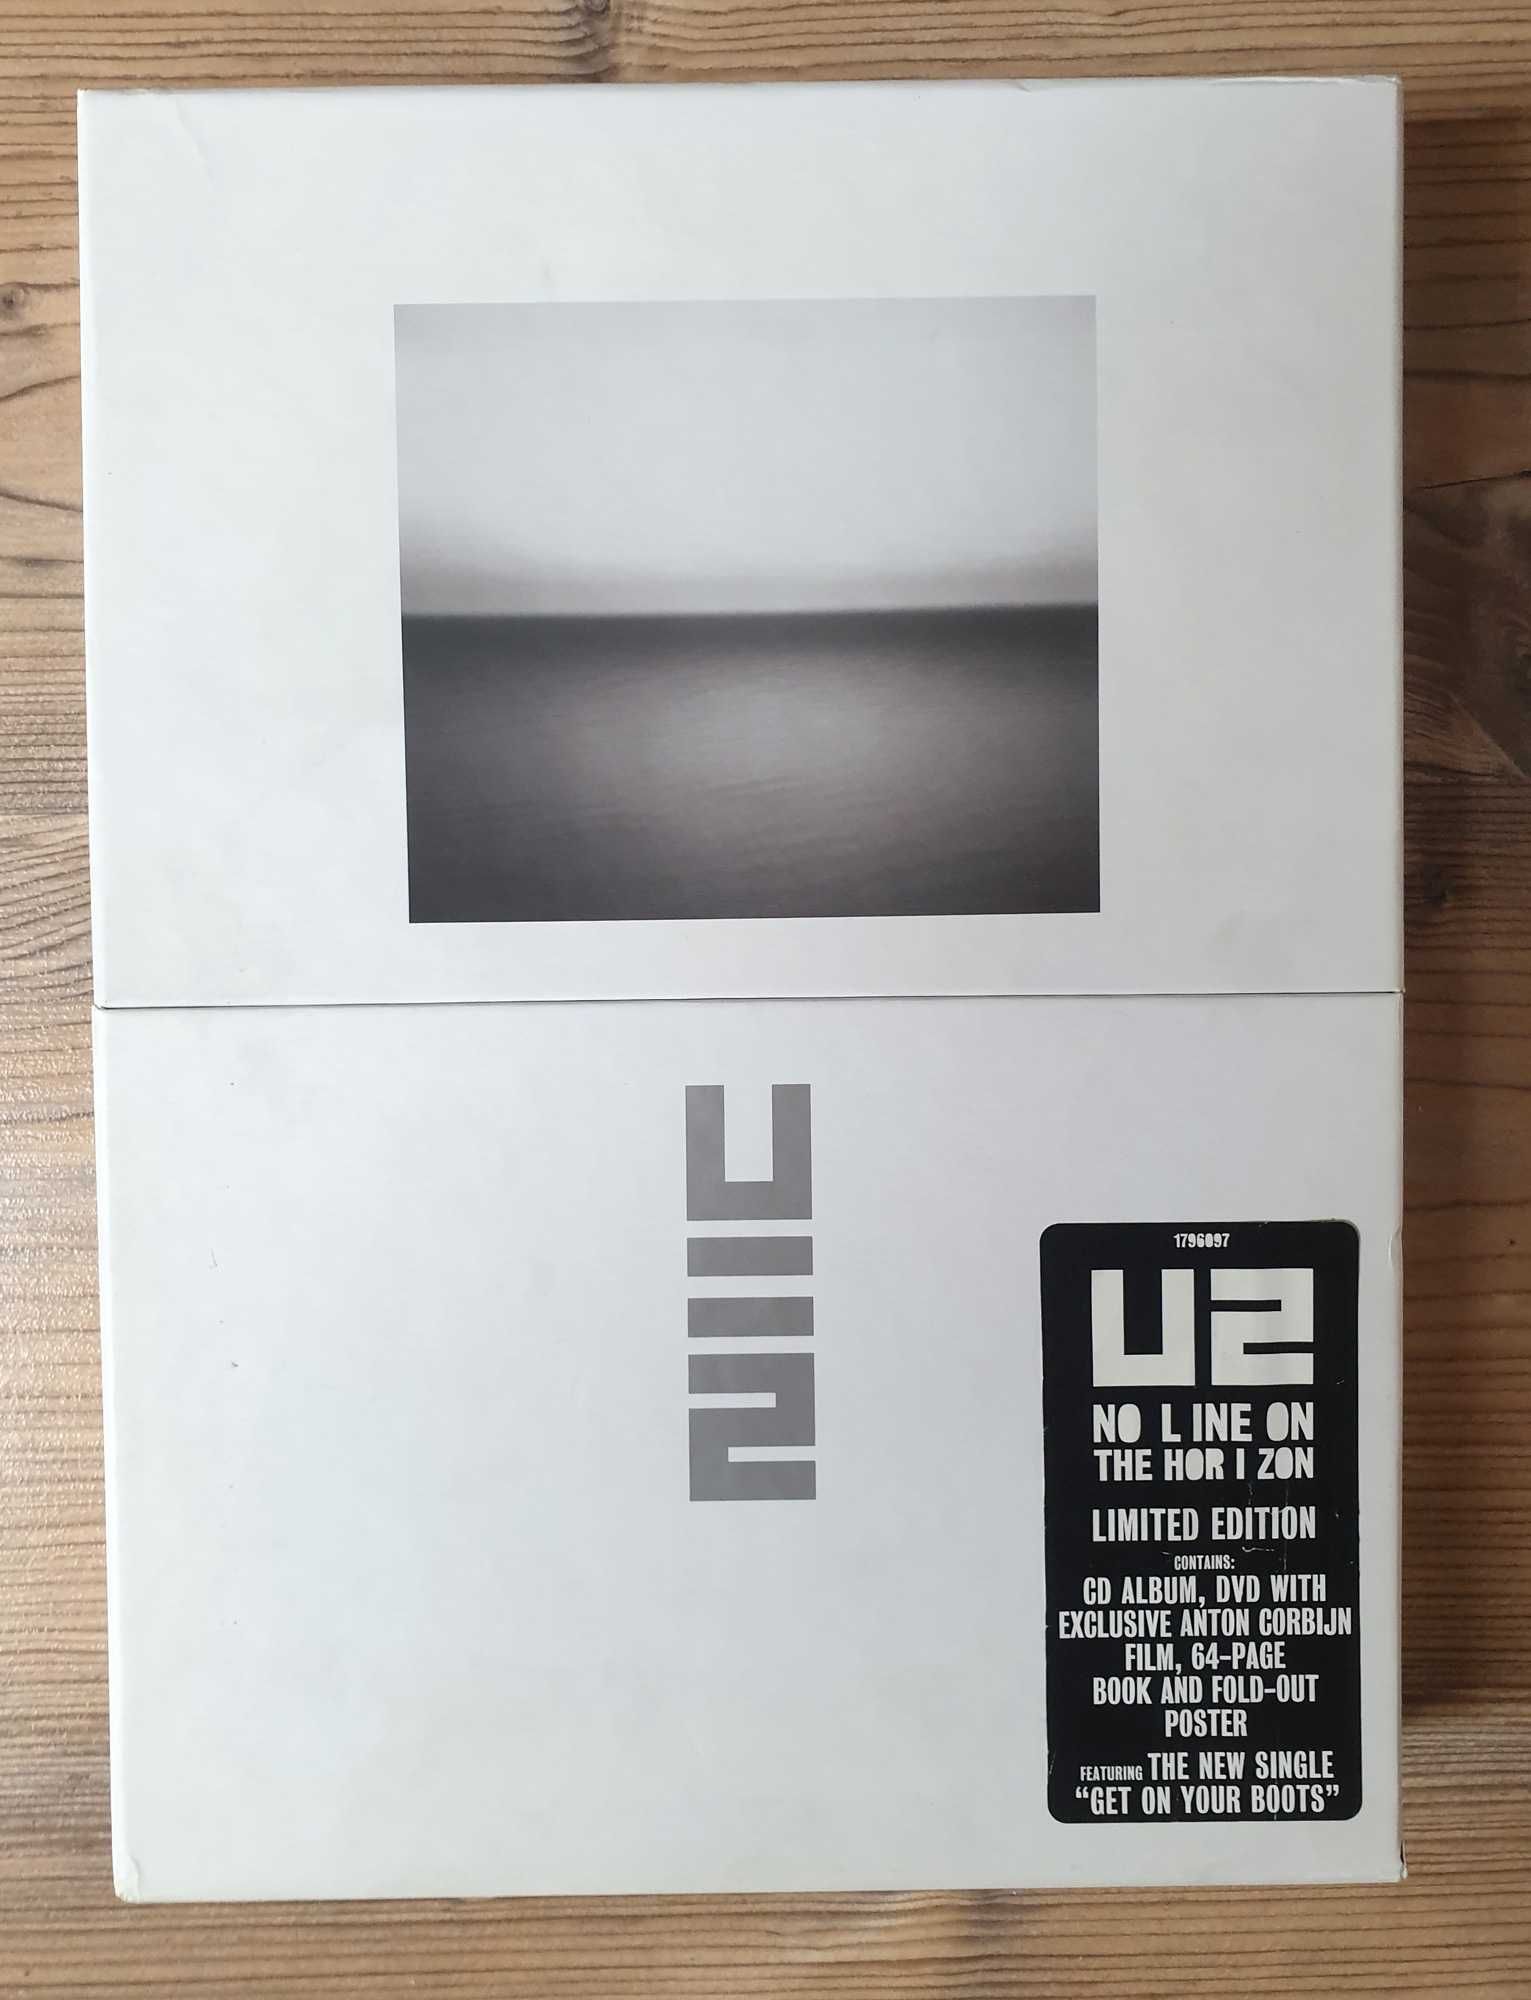 U2 No Line On The Horizon BOX! Limited Edition